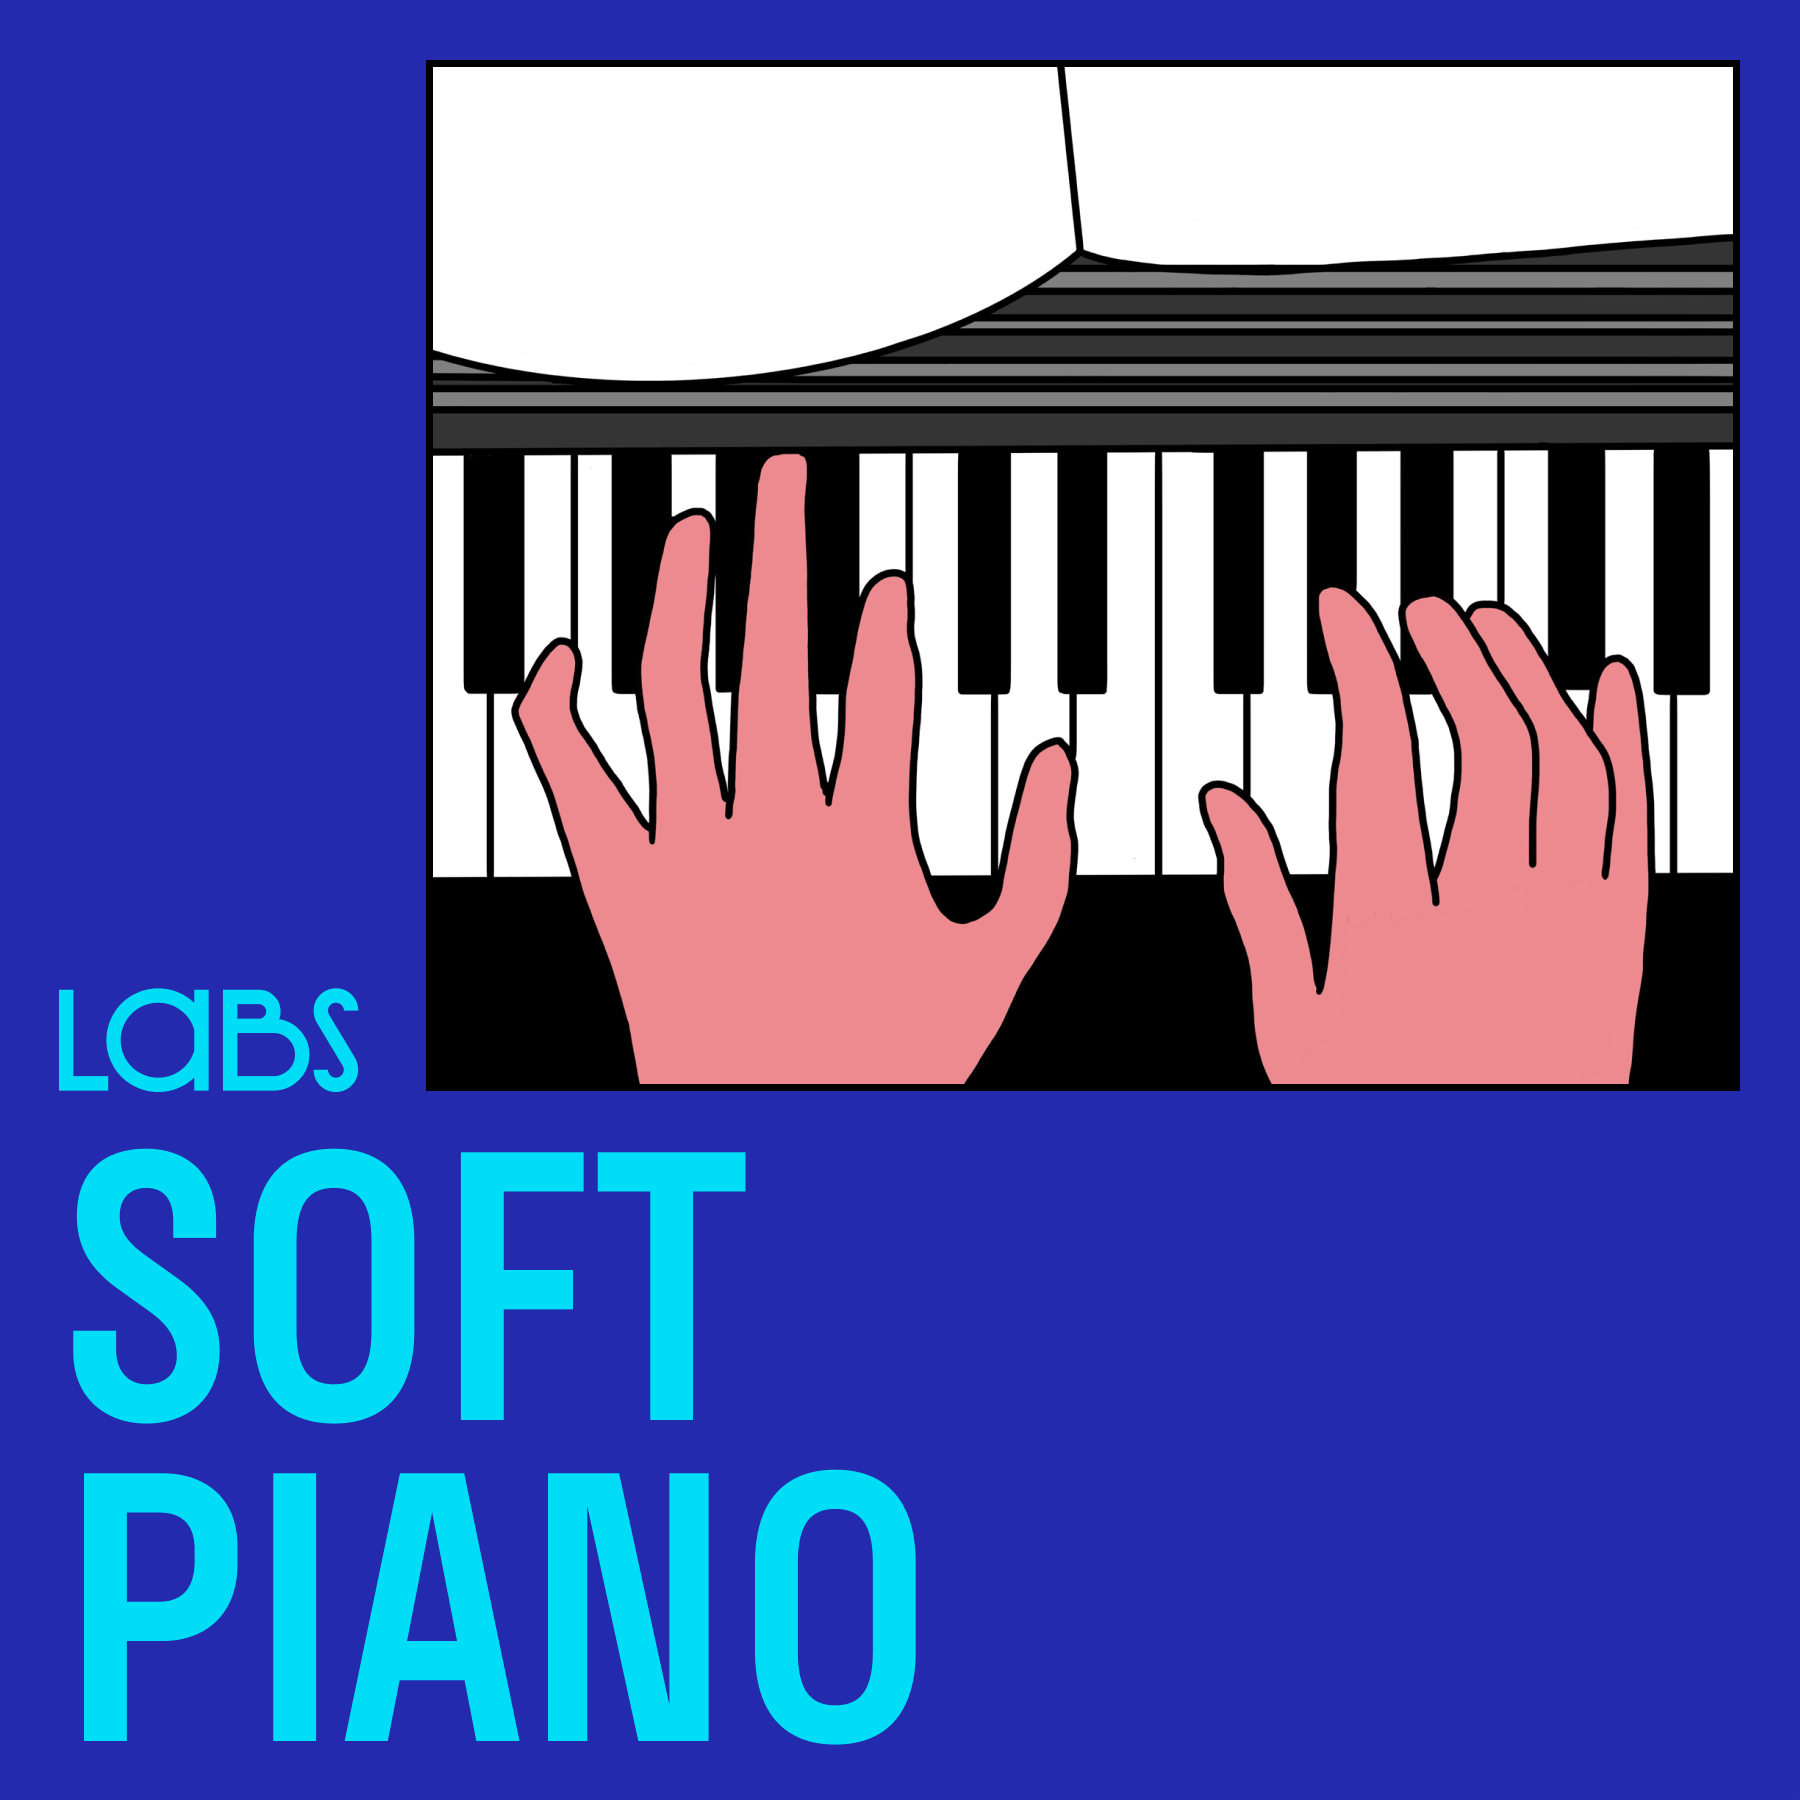 LABS Soft Piano